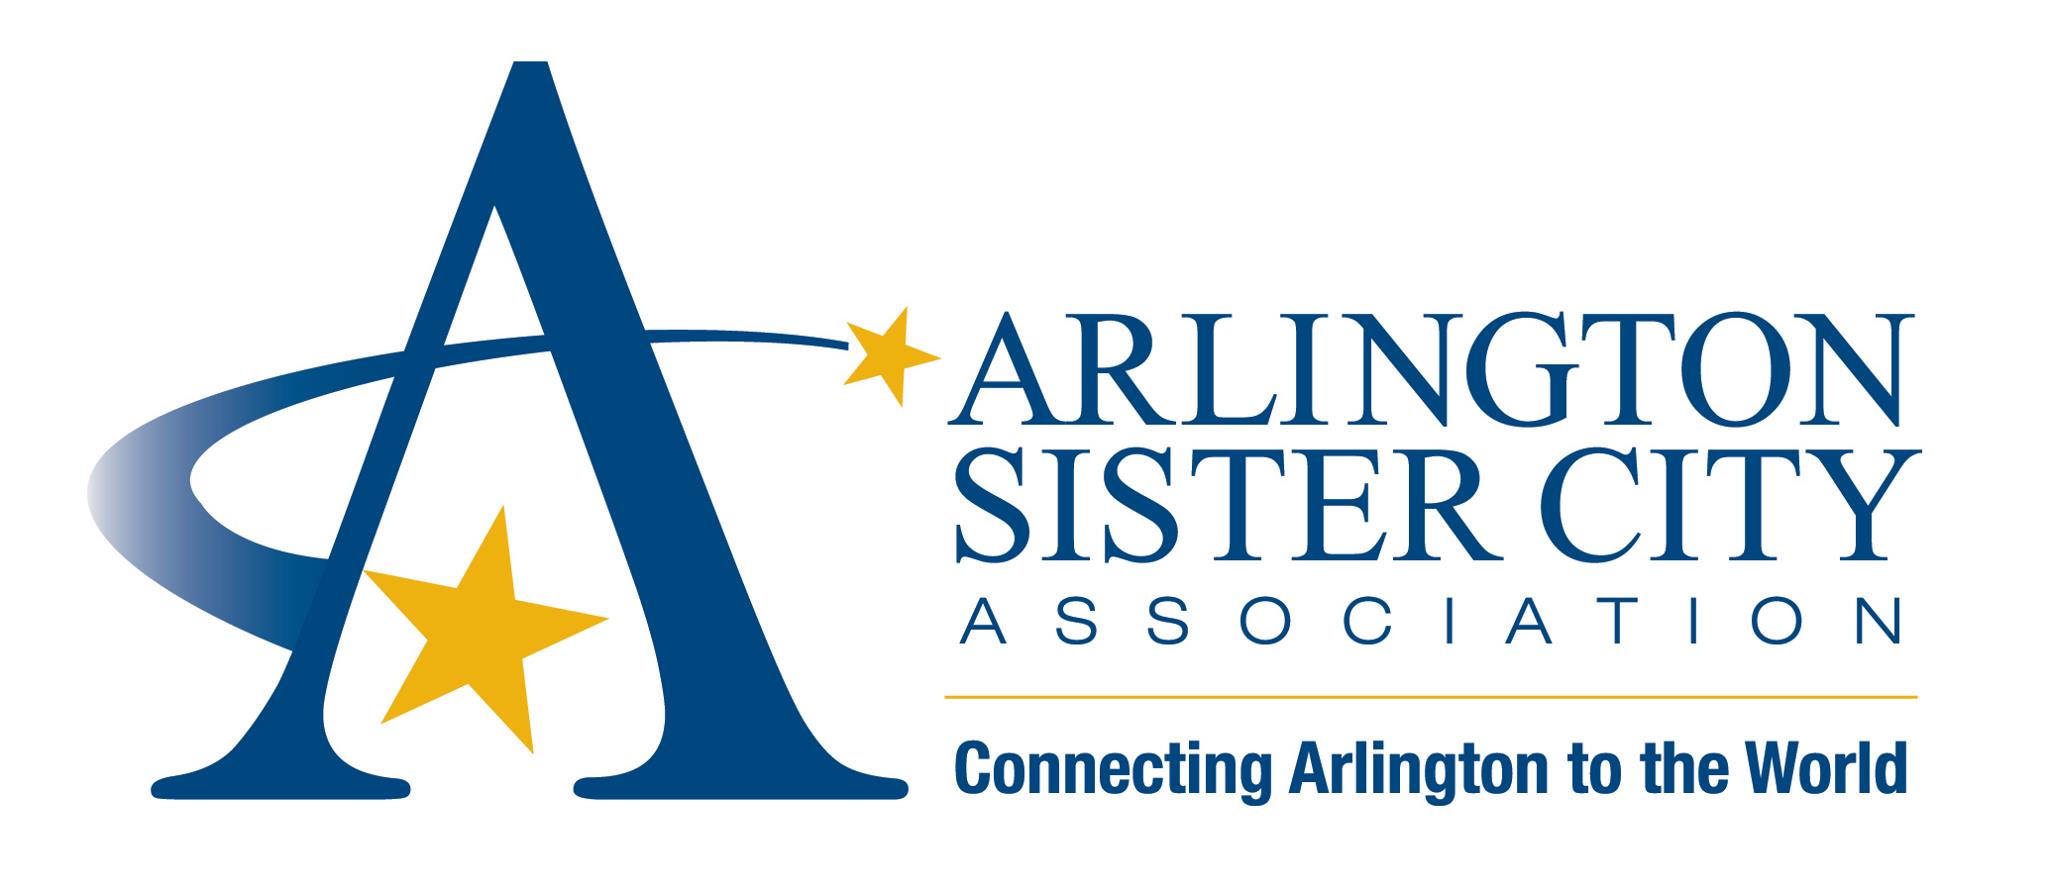 Arlington Sister City Association